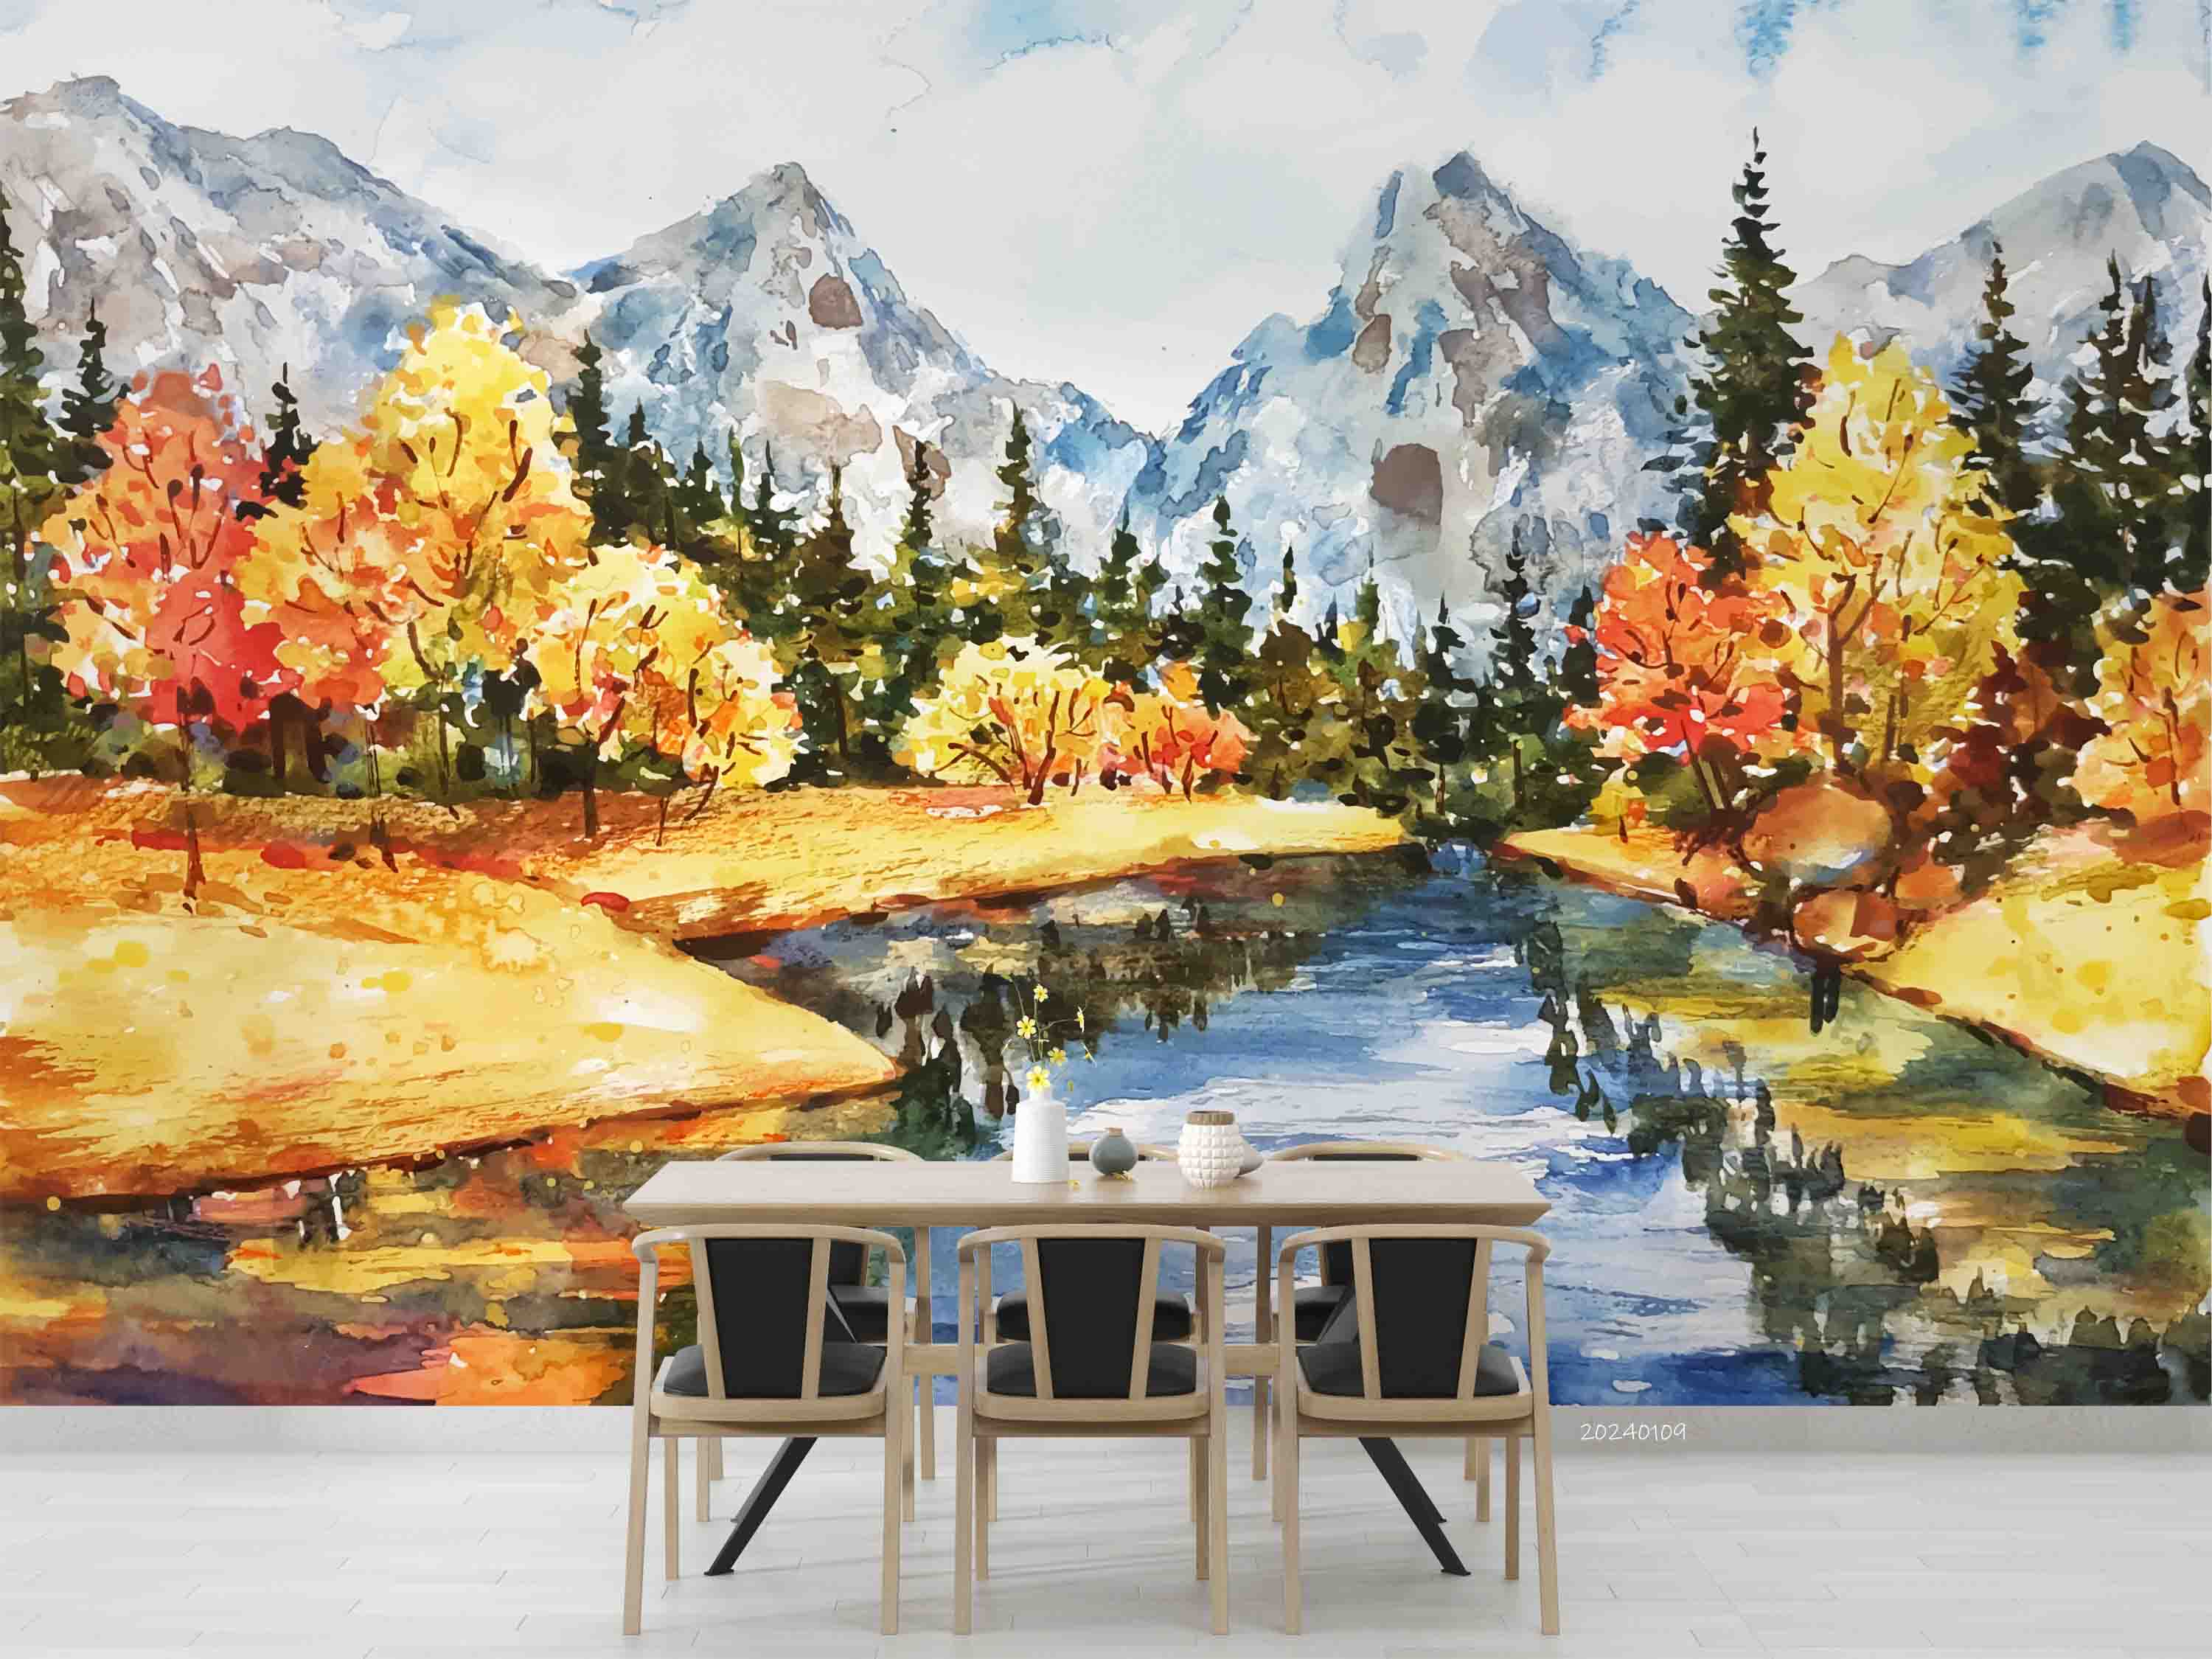 3D Oil Painting Tree Mountain Floral Grassland Wall Mural Wallpaper YXL 154